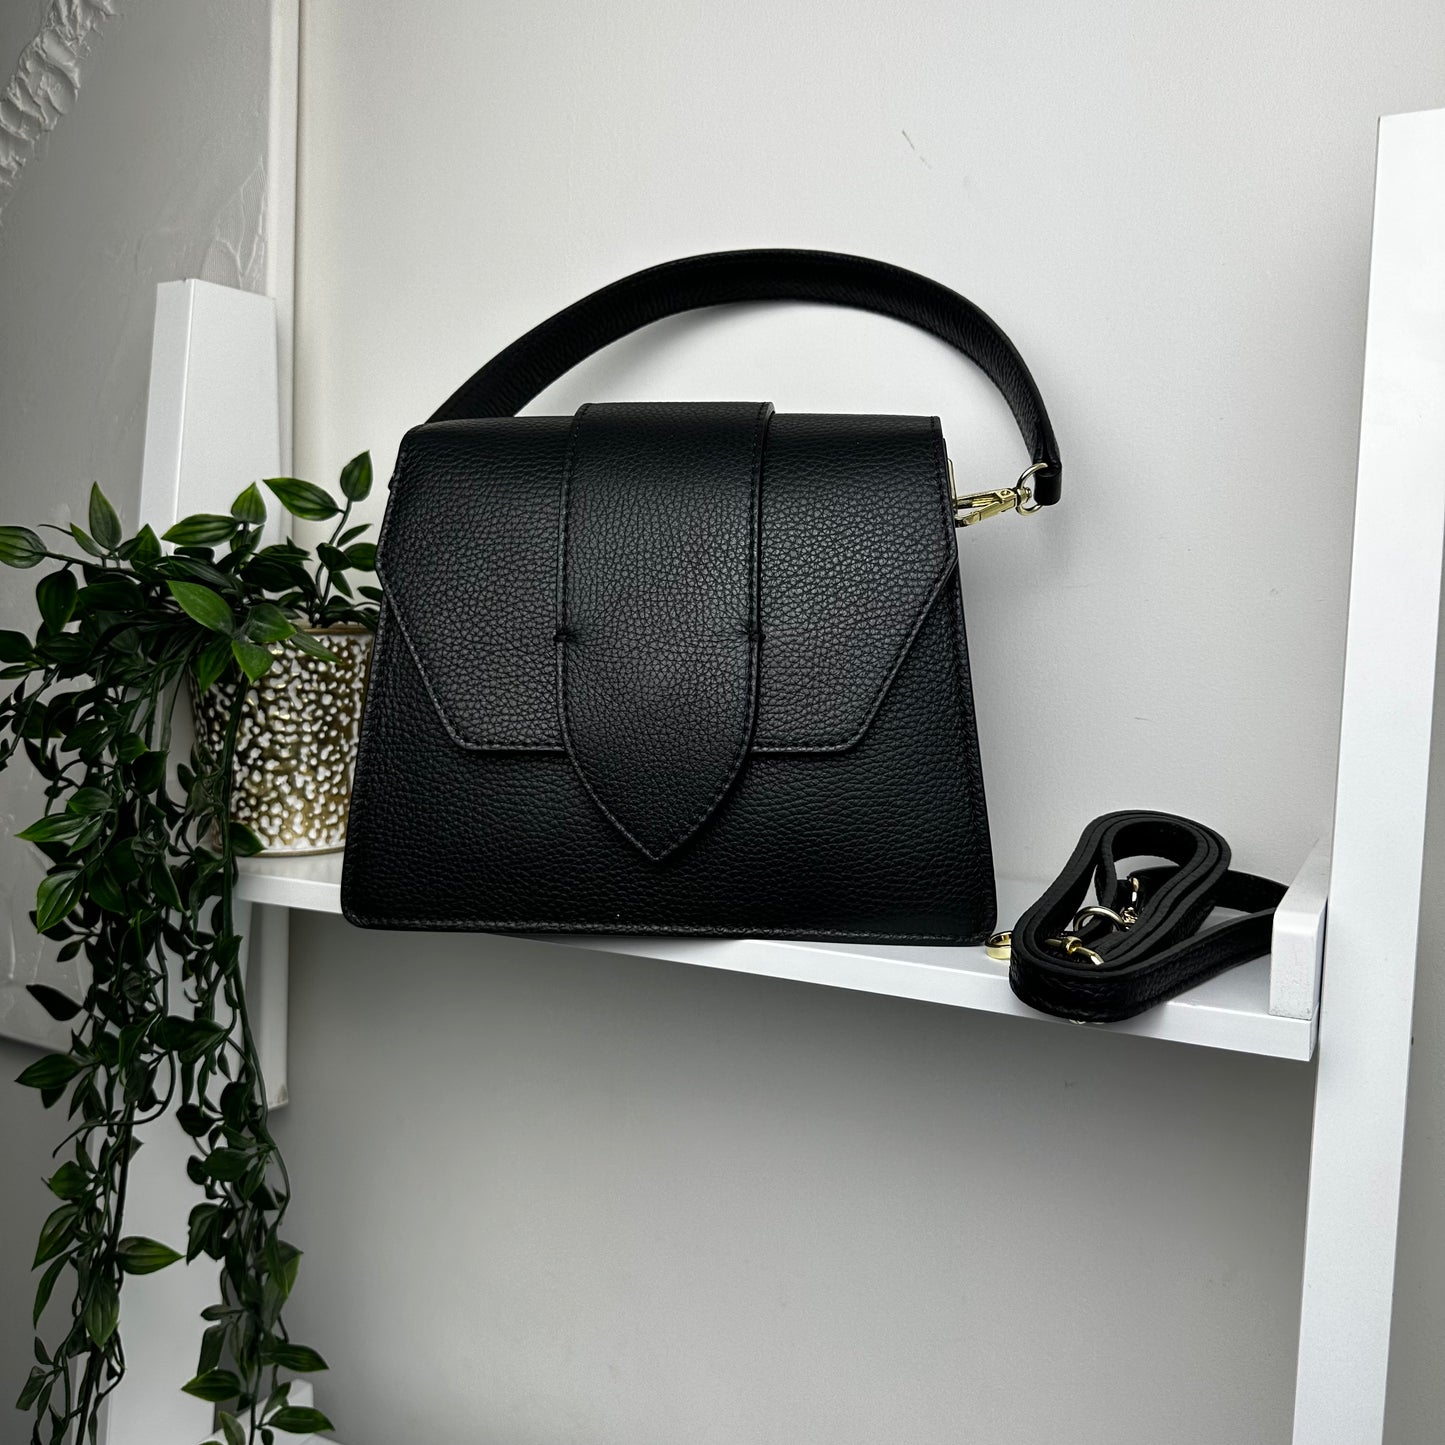 Leather satchel style Crossbody Bag top handle SAMPLE